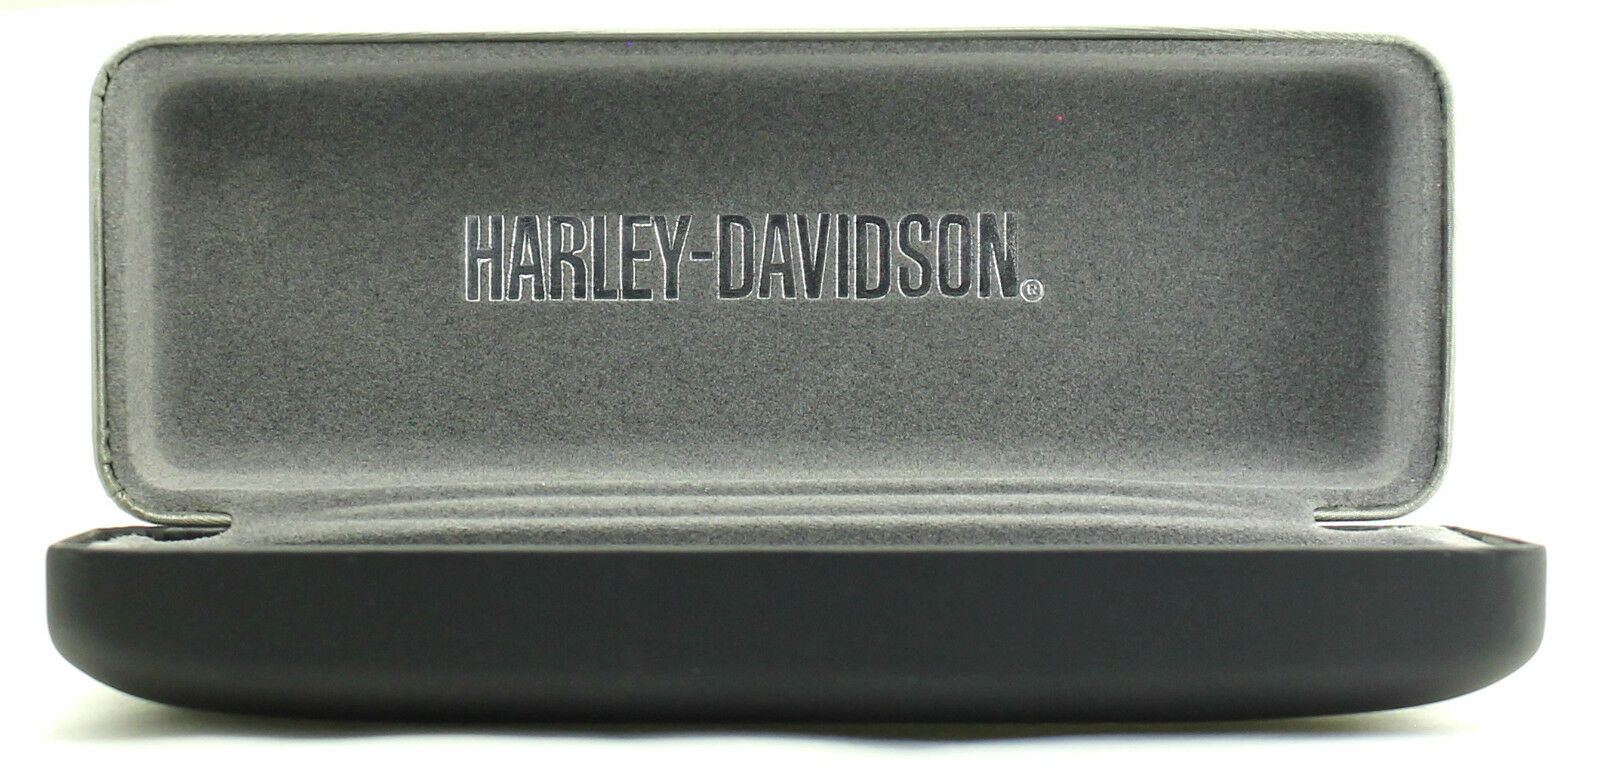 HARLEY-DAVIDSON HD473 NV Eyewear FRAMES RX Optical Eyeglasses Glasses - New BNIB